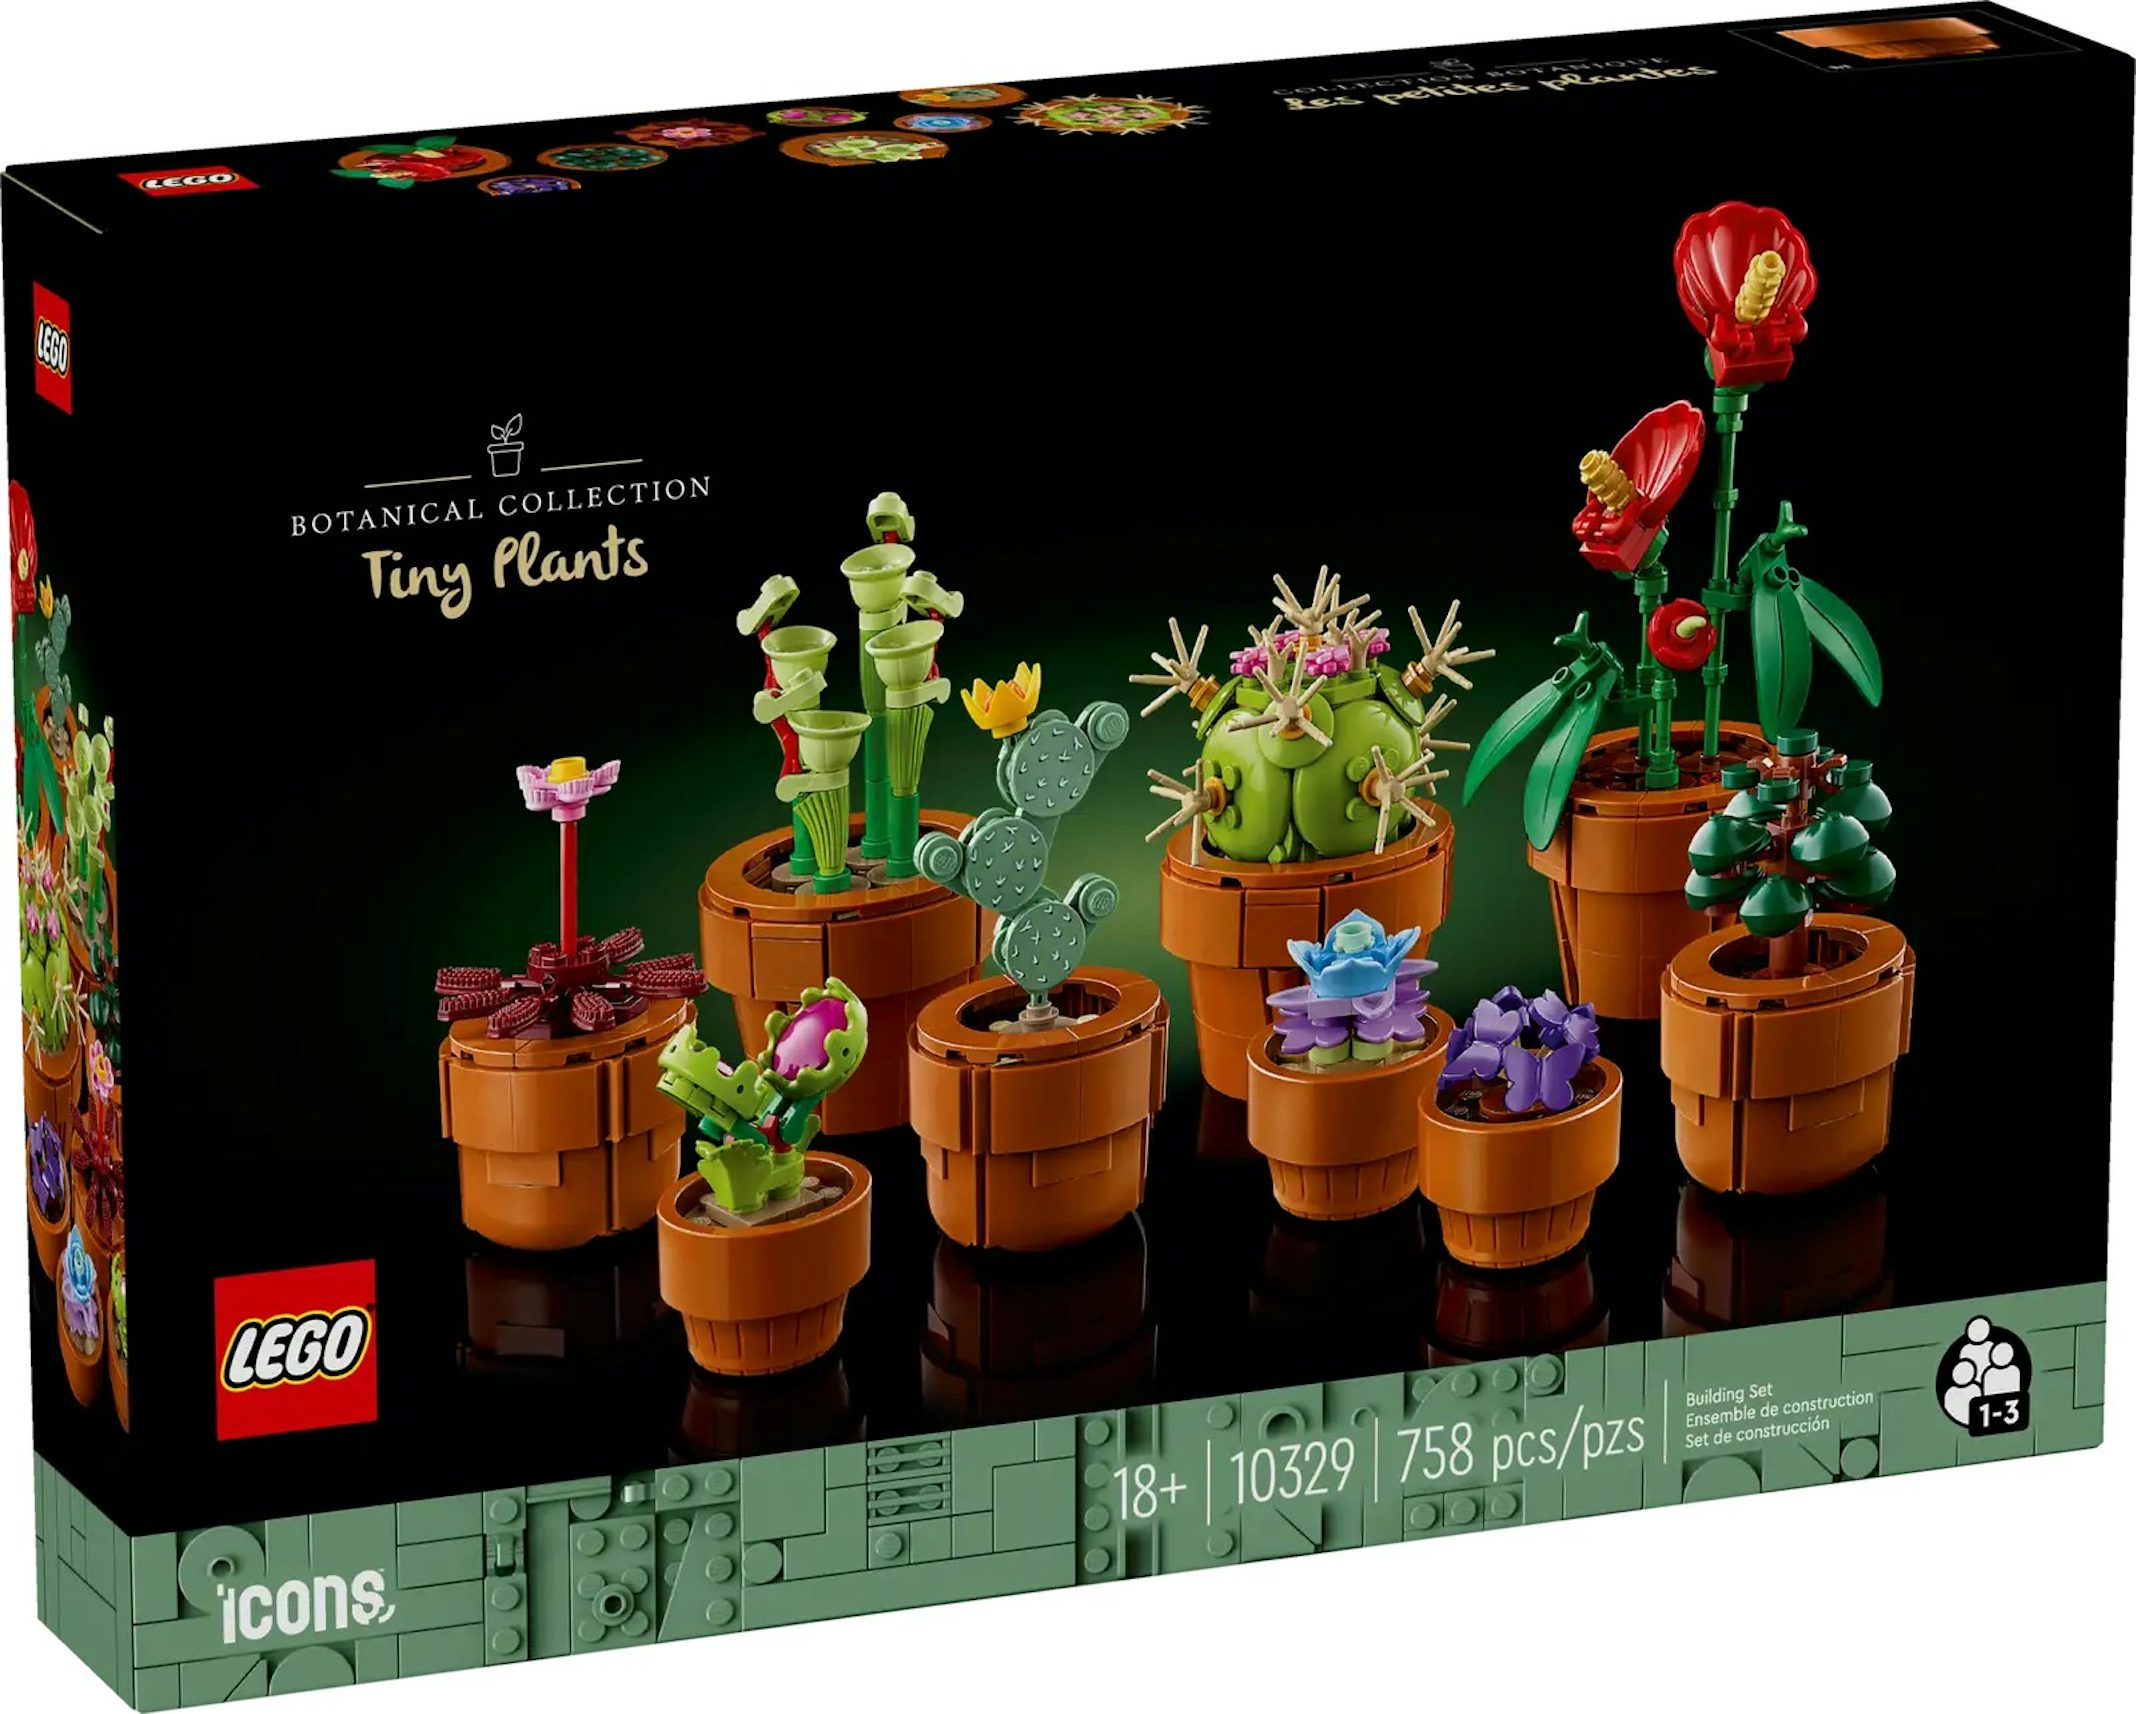 https://images.stockx.com/images/LEGO-ICONS-Tiny-Plants-Set-10329.jpg?fit=fill&bg=FFFFFF&w=1200&h=857&fm=jpg&auto=compress&dpr=2&trim=color&updated_at=1698689661&q=60